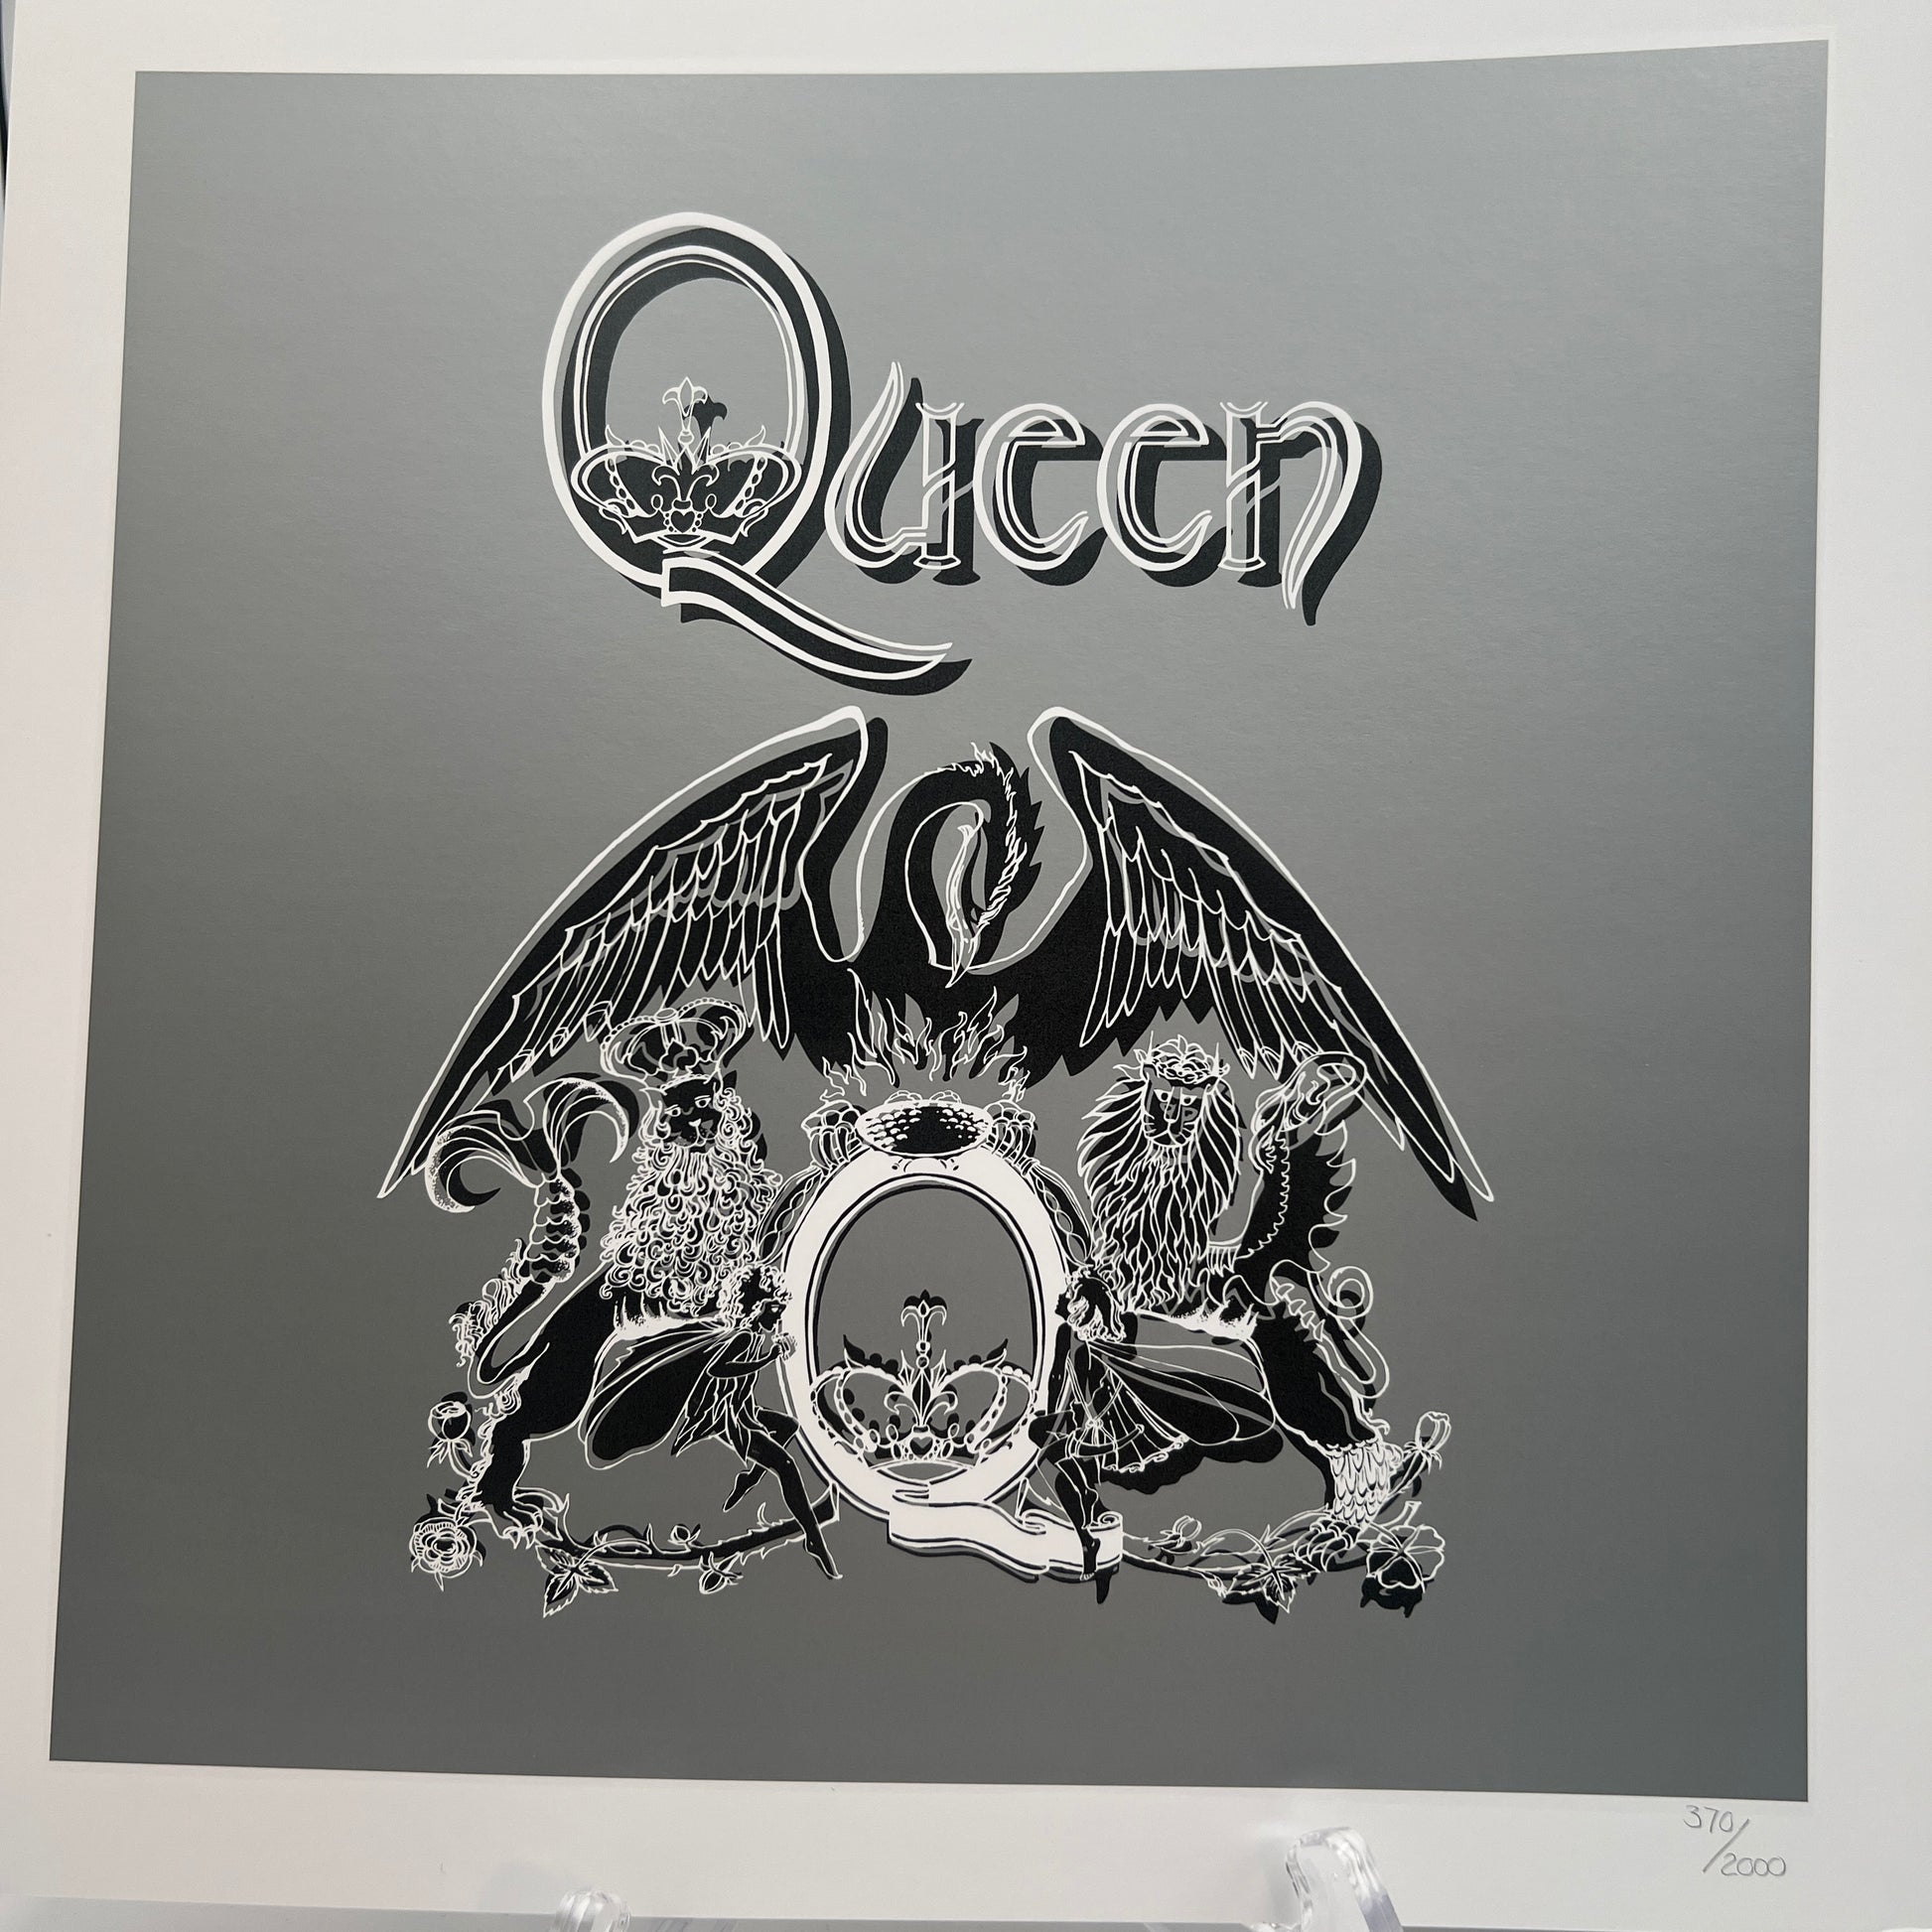 Queen - Box 6Vinilo The Platinum Collection